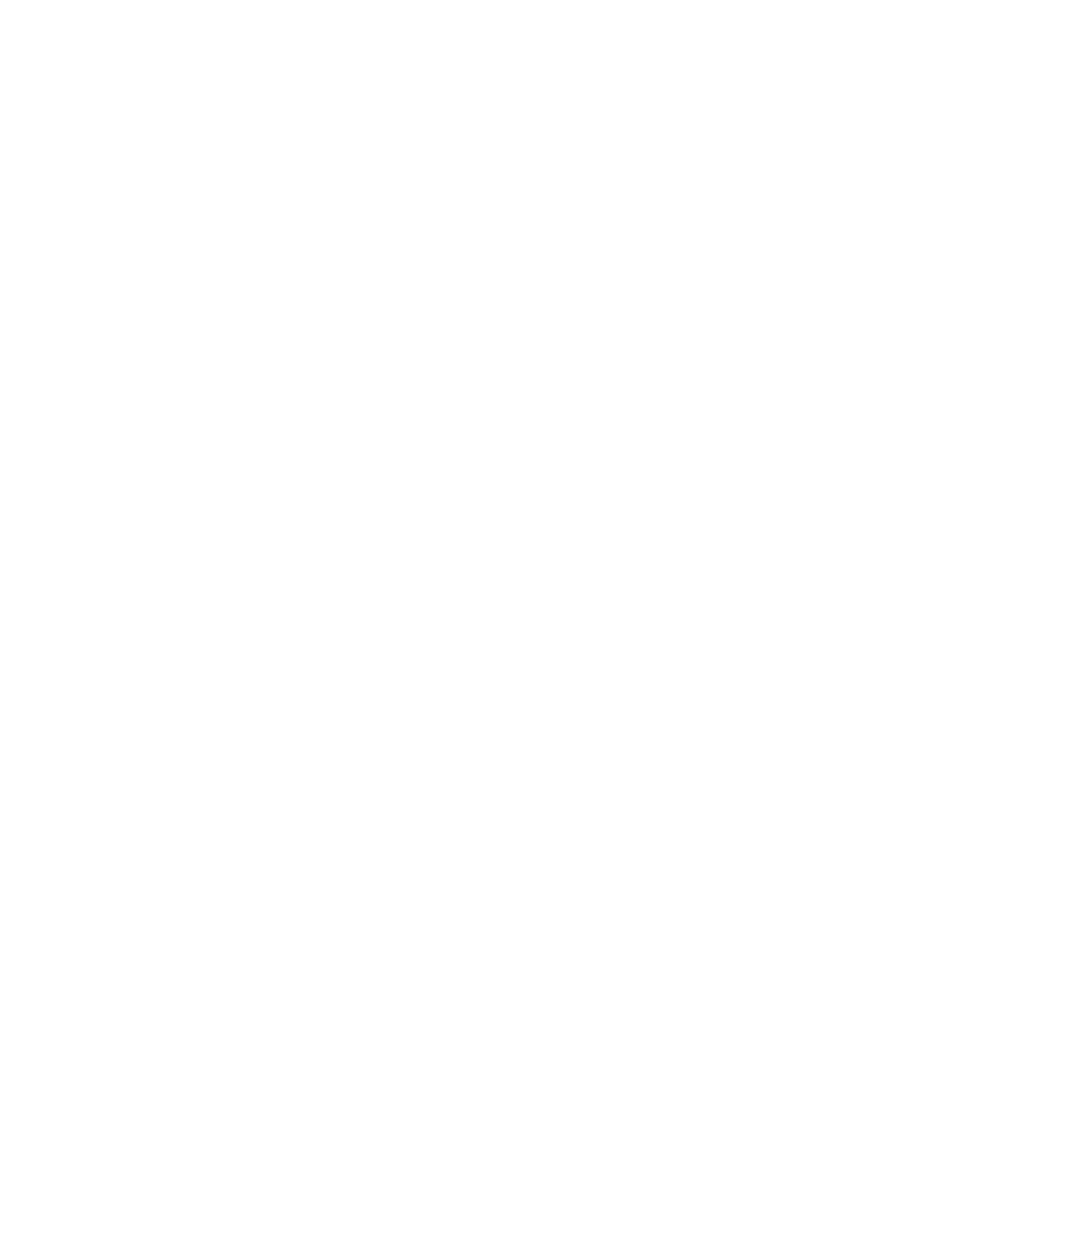 The Rix